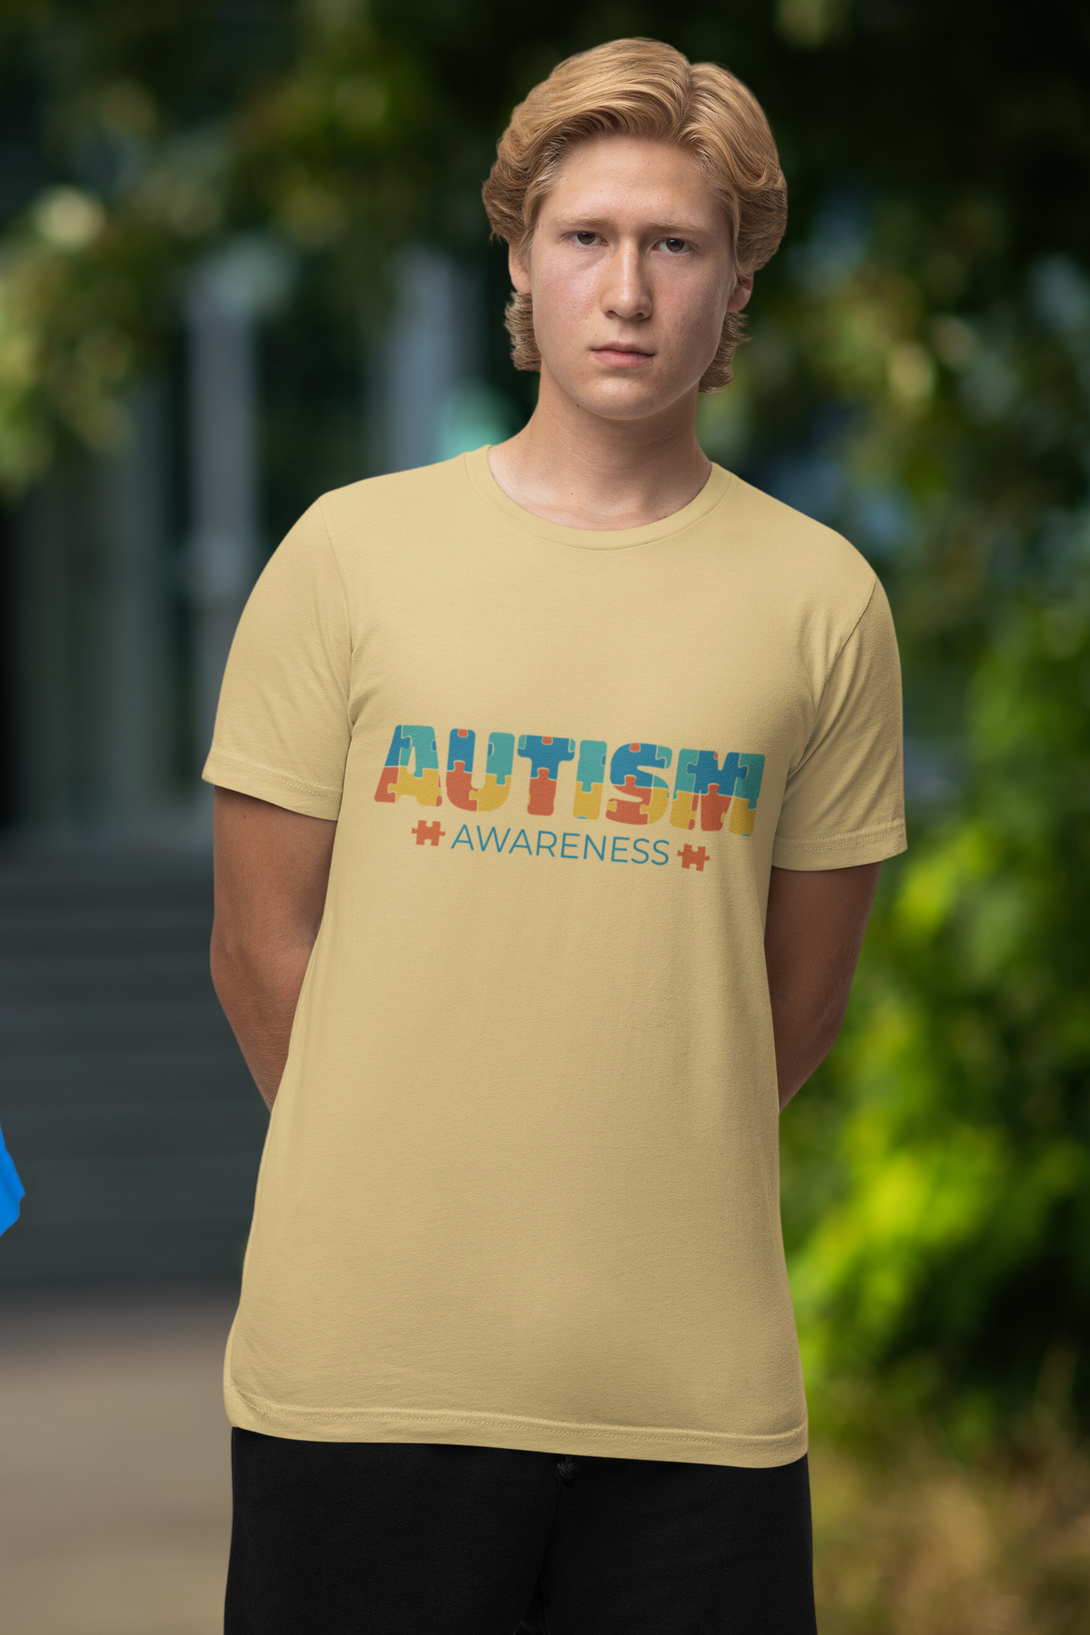 Autism Awareness Printed T-Shirt For Men - WowWaves - 3